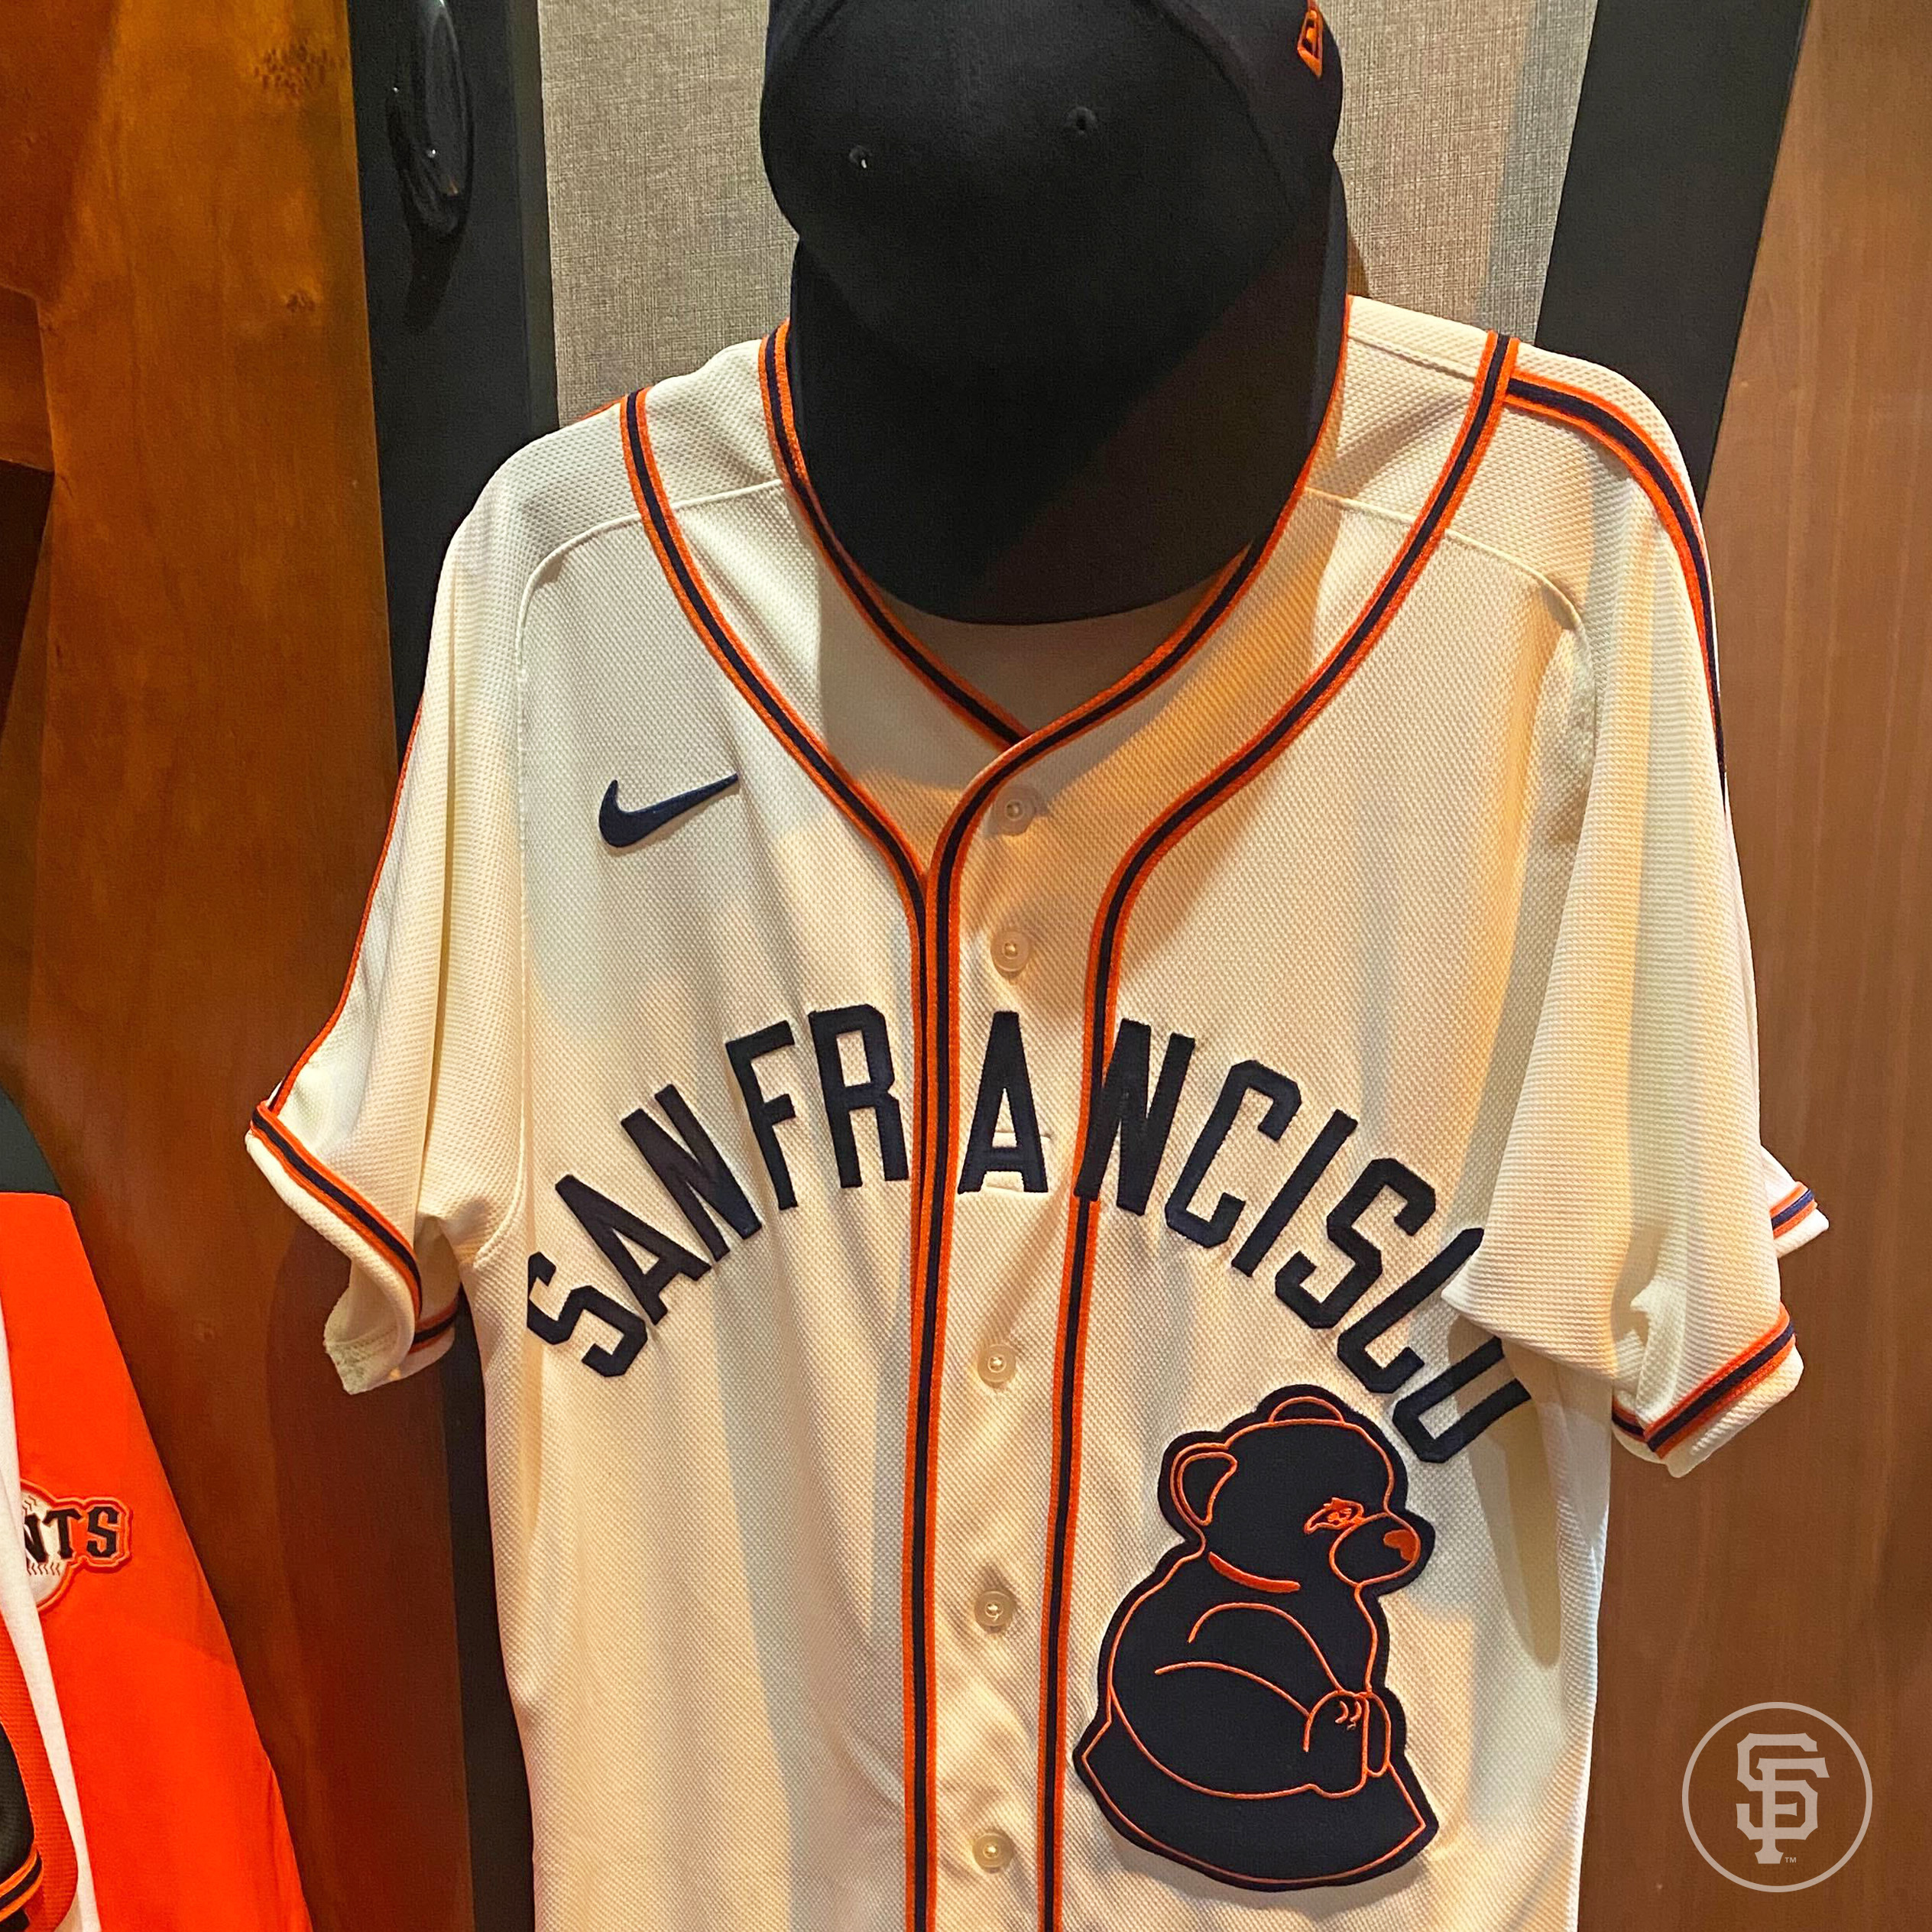 Pavlovic] The Giants will wear San Francisco Sea Lions jerseys on